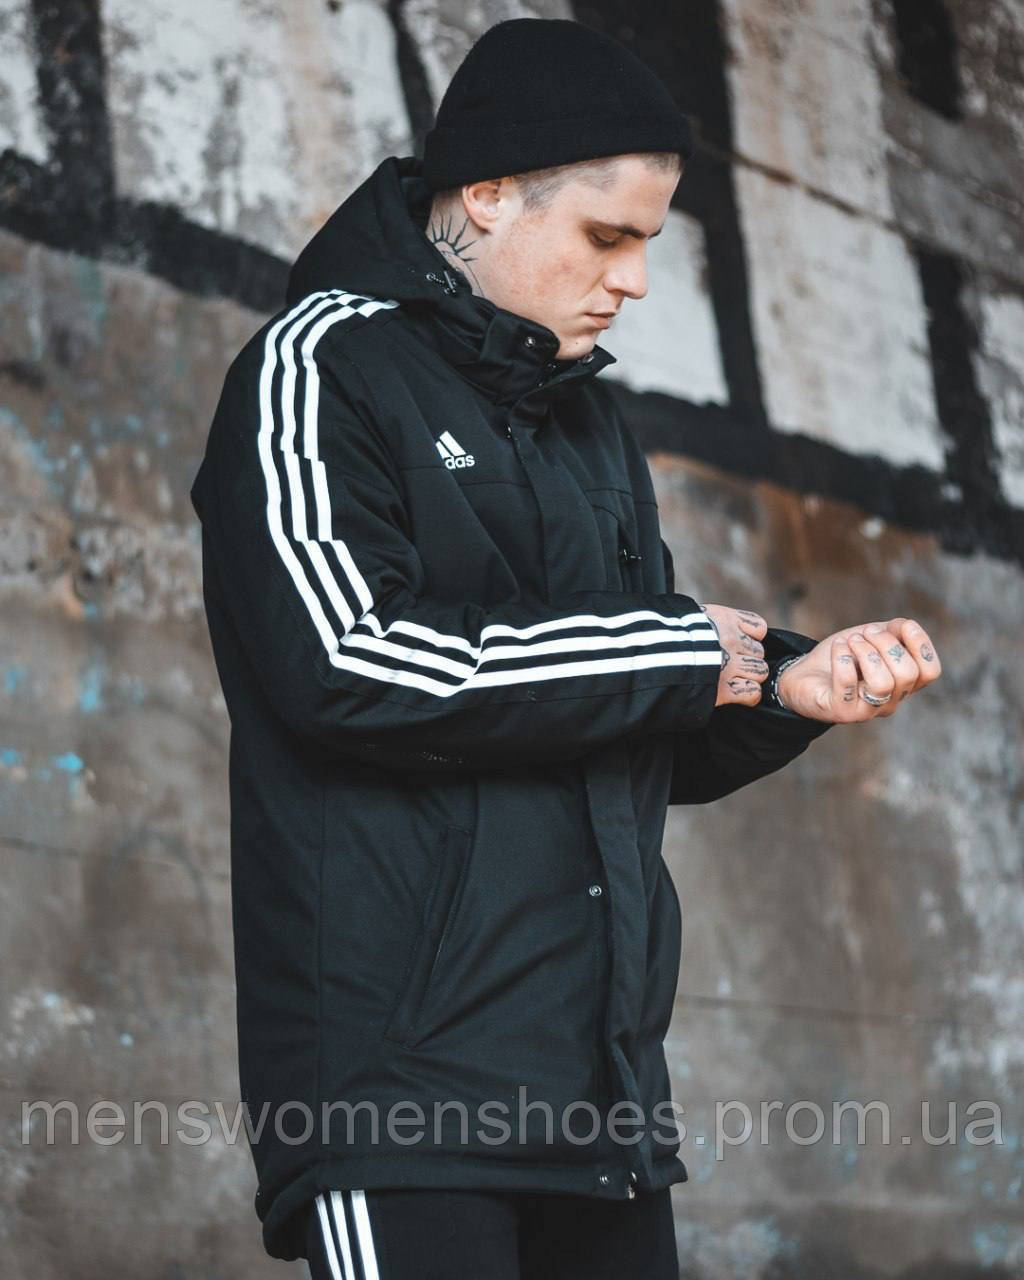 

Куртка мужская спортивная осенняя Деми чёрная с лампасами белыми утеплённая Адидас